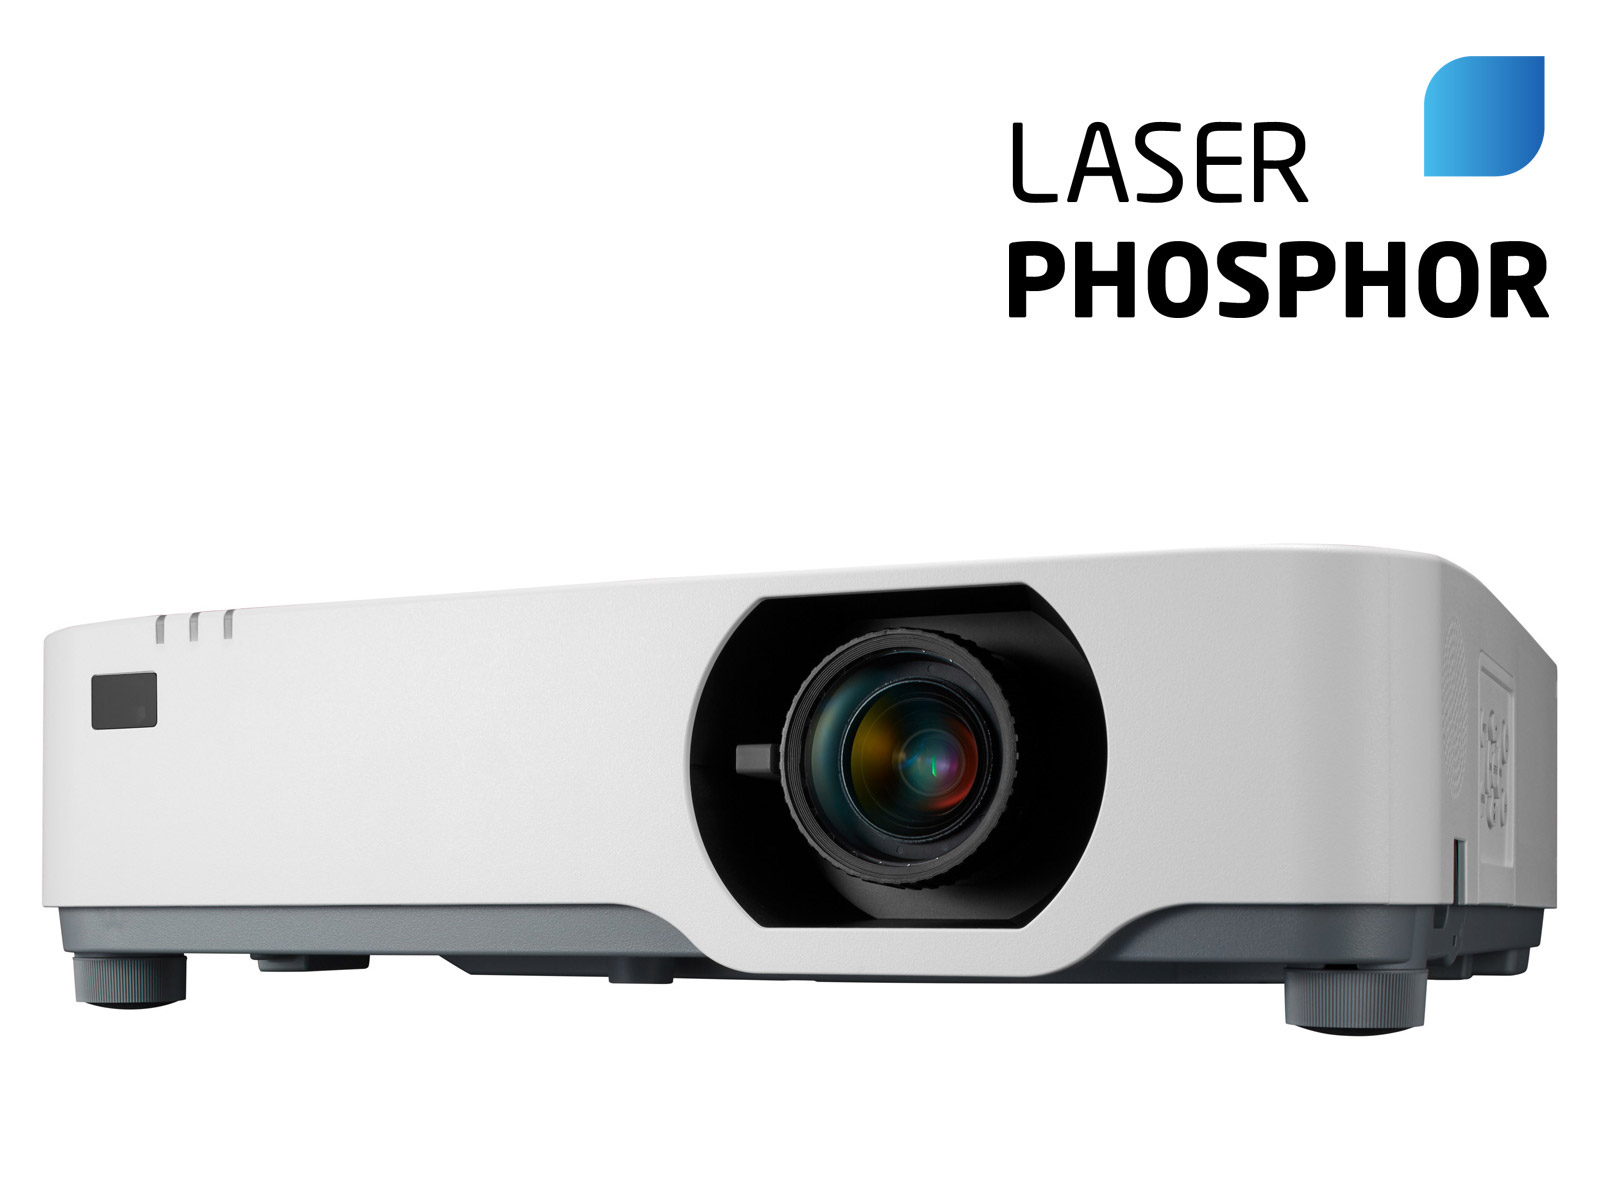 NEC P525UL Laserbeamer Laser Phosphor